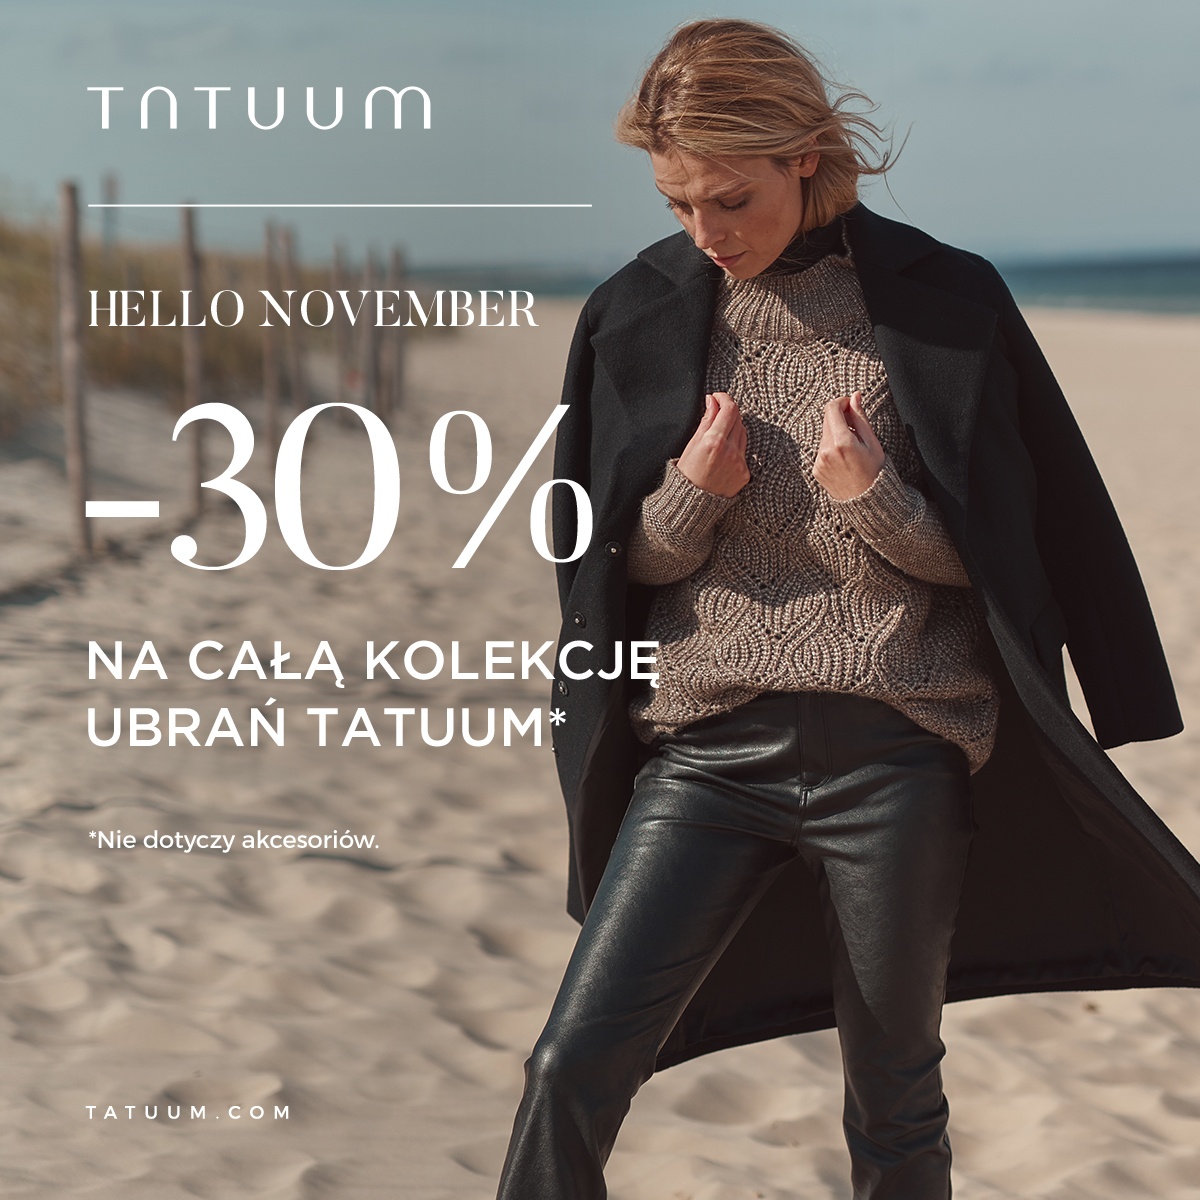 Hello November -30% na całą kolekcję ubrań TATUUM!